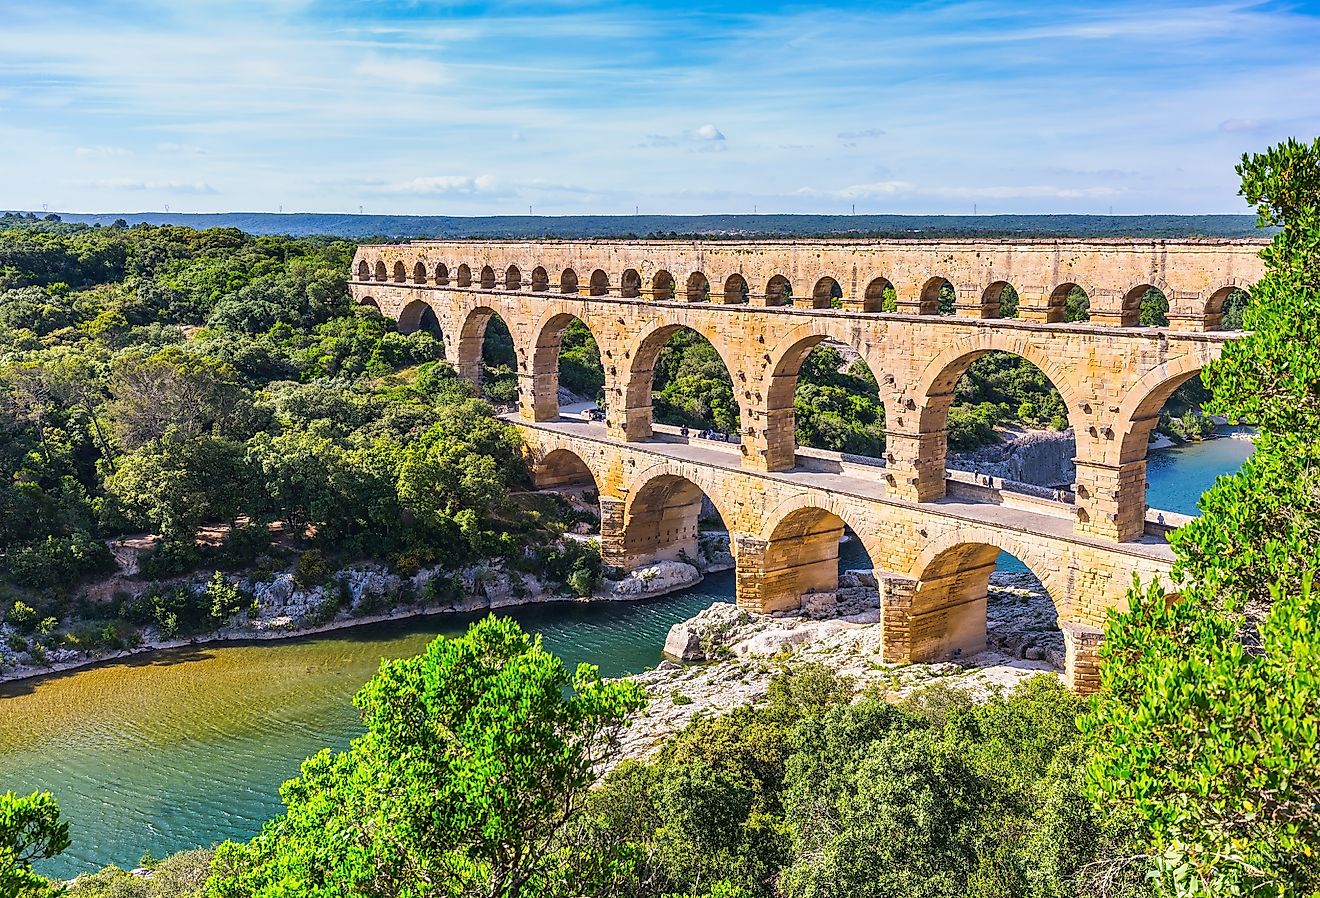 Three-tiered aqueduct Pont du Gard, built in Roman times on the River Gardon.